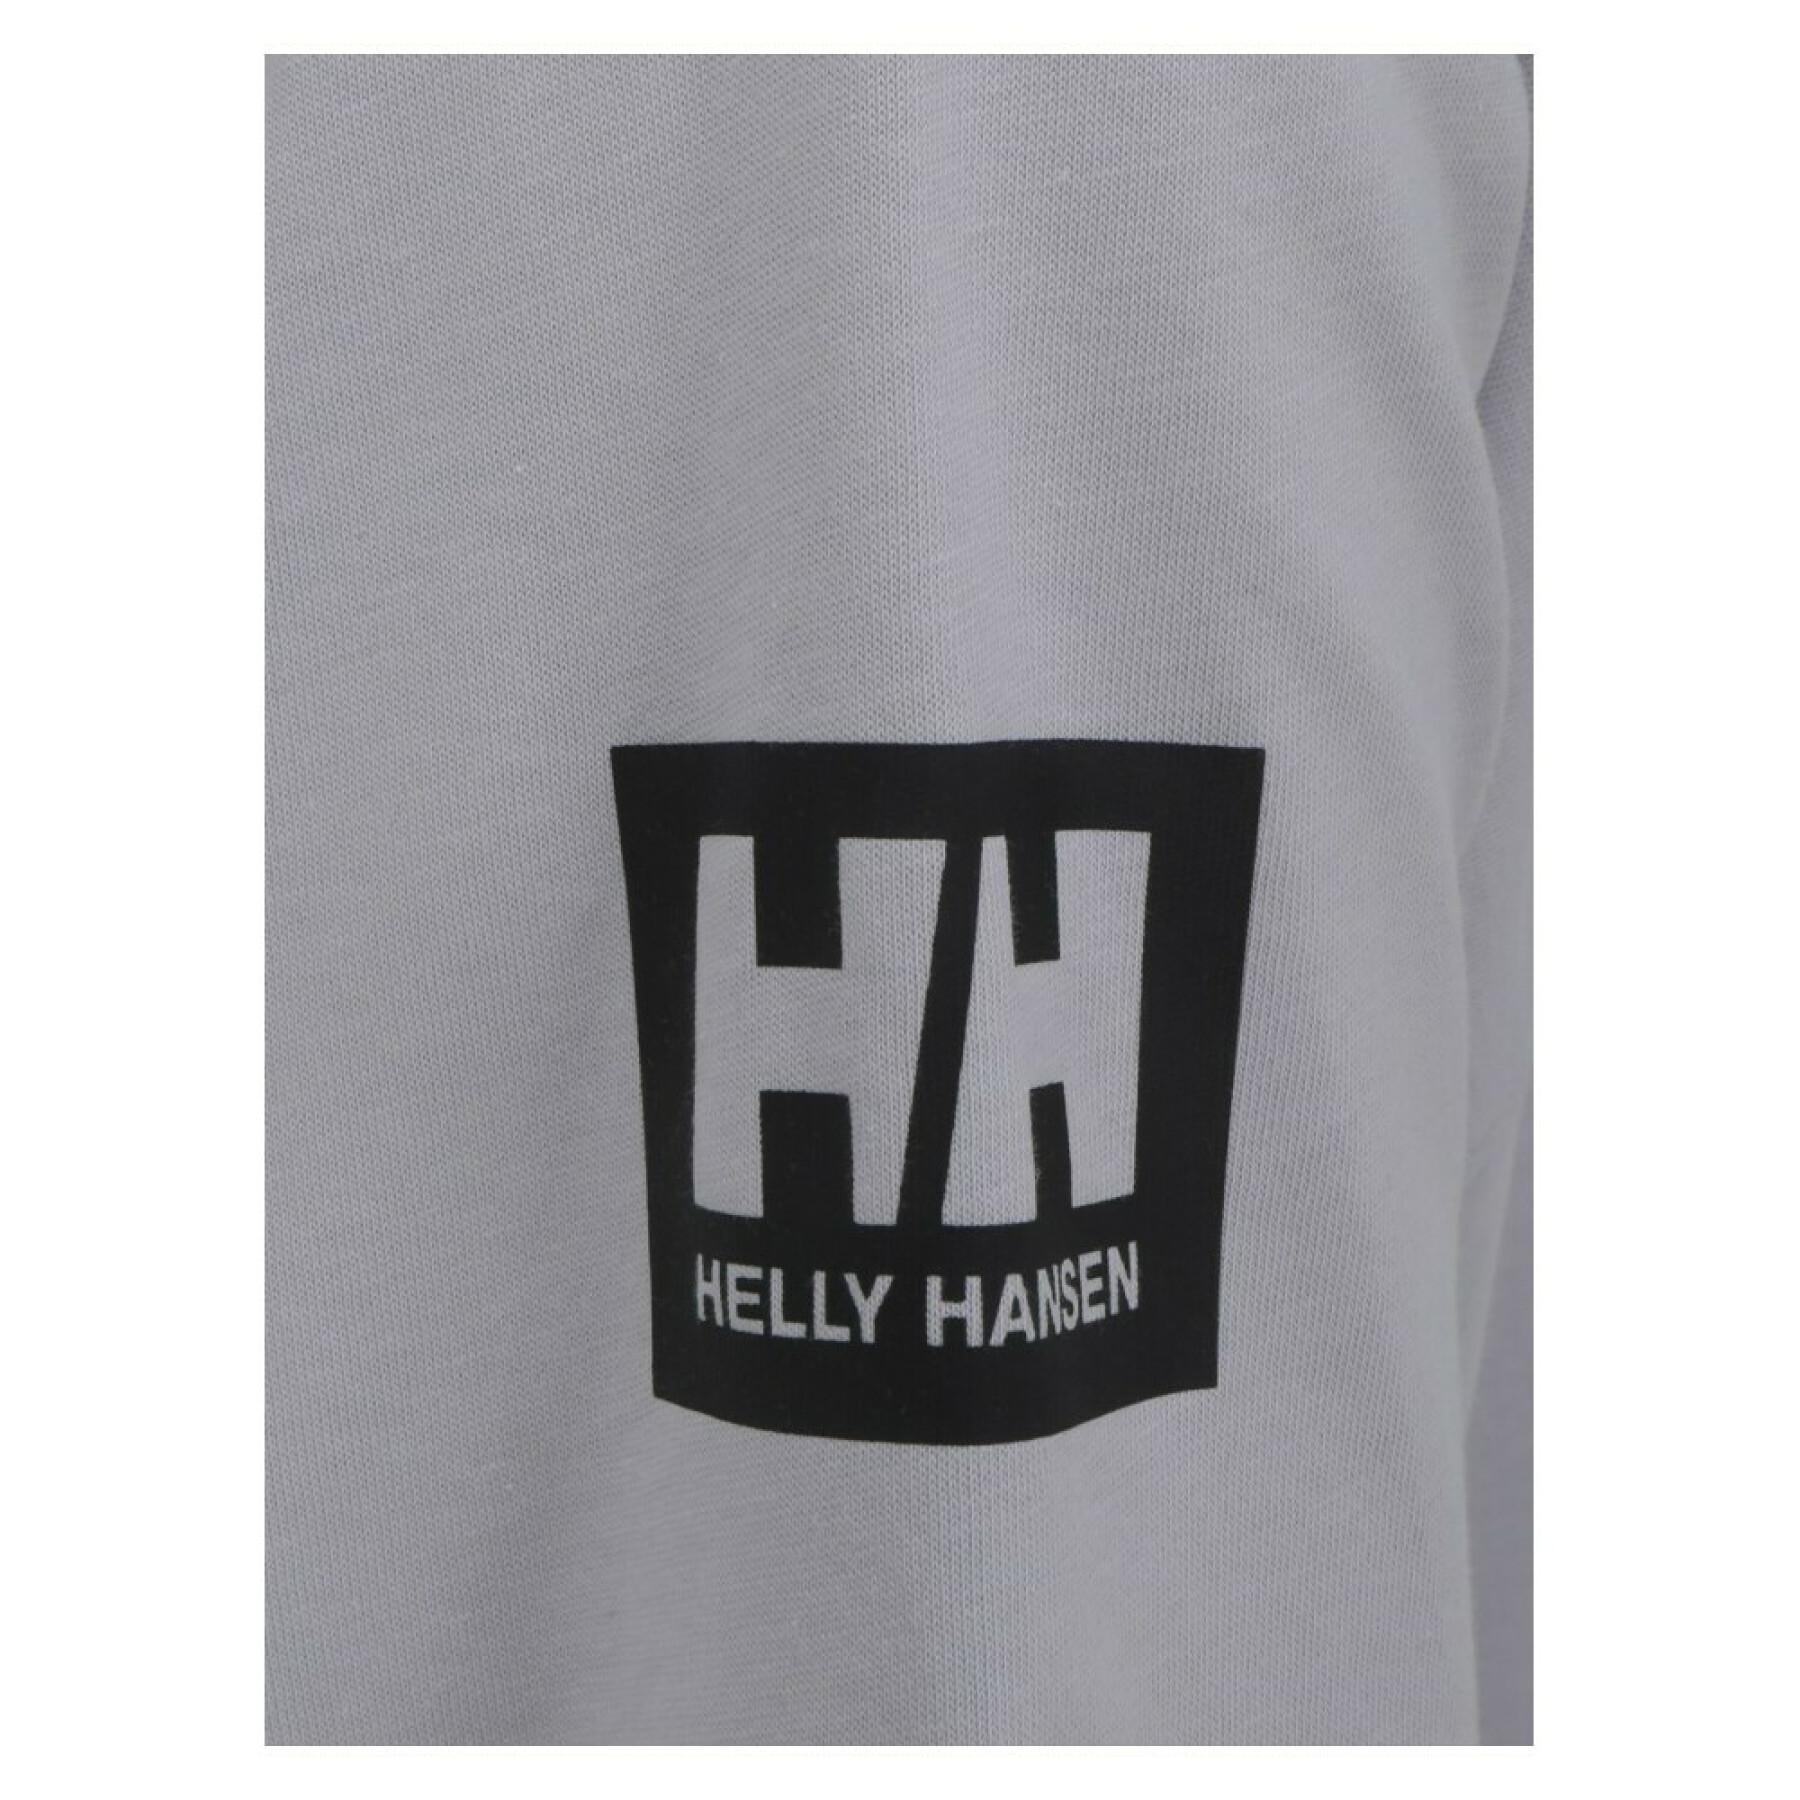 Camiseta Helly Hansen Arc 22 block